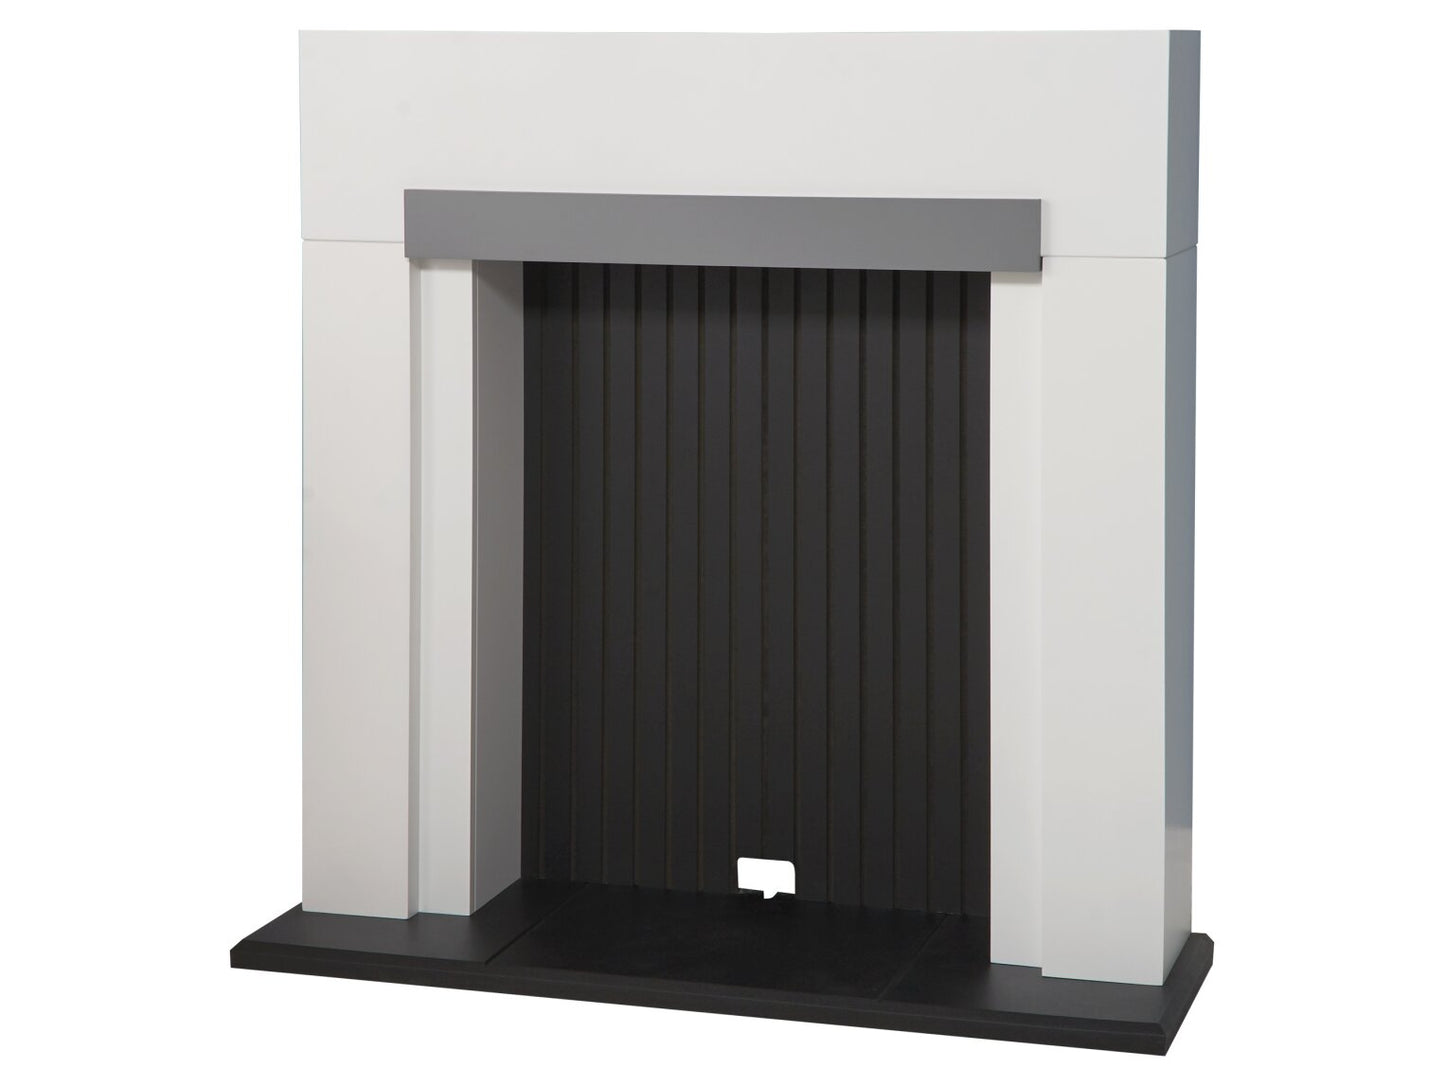 Adam Salzburg Stove Fireplace with Grey Shelf, 39 Inch 22738 Pure White